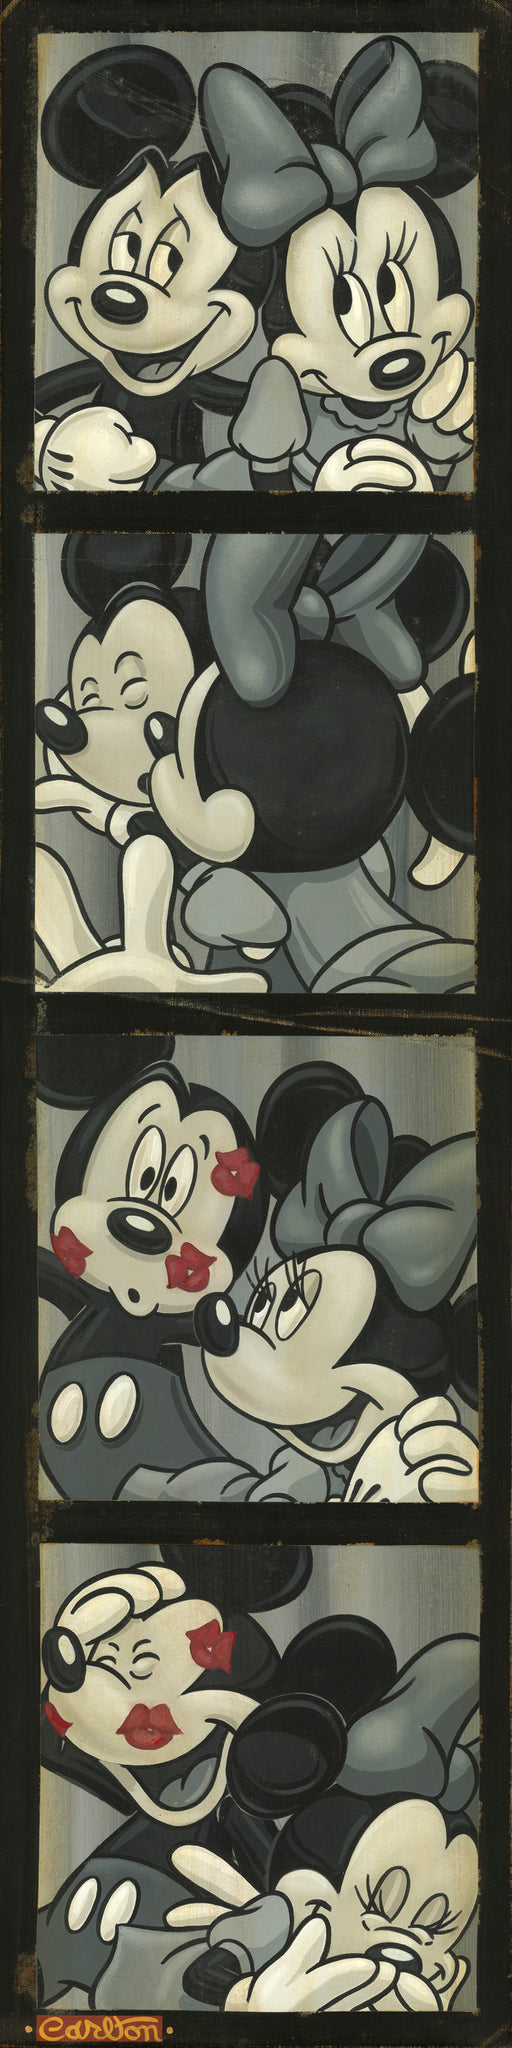 Photo Booth Kiss - Disney Treasure On Canvas